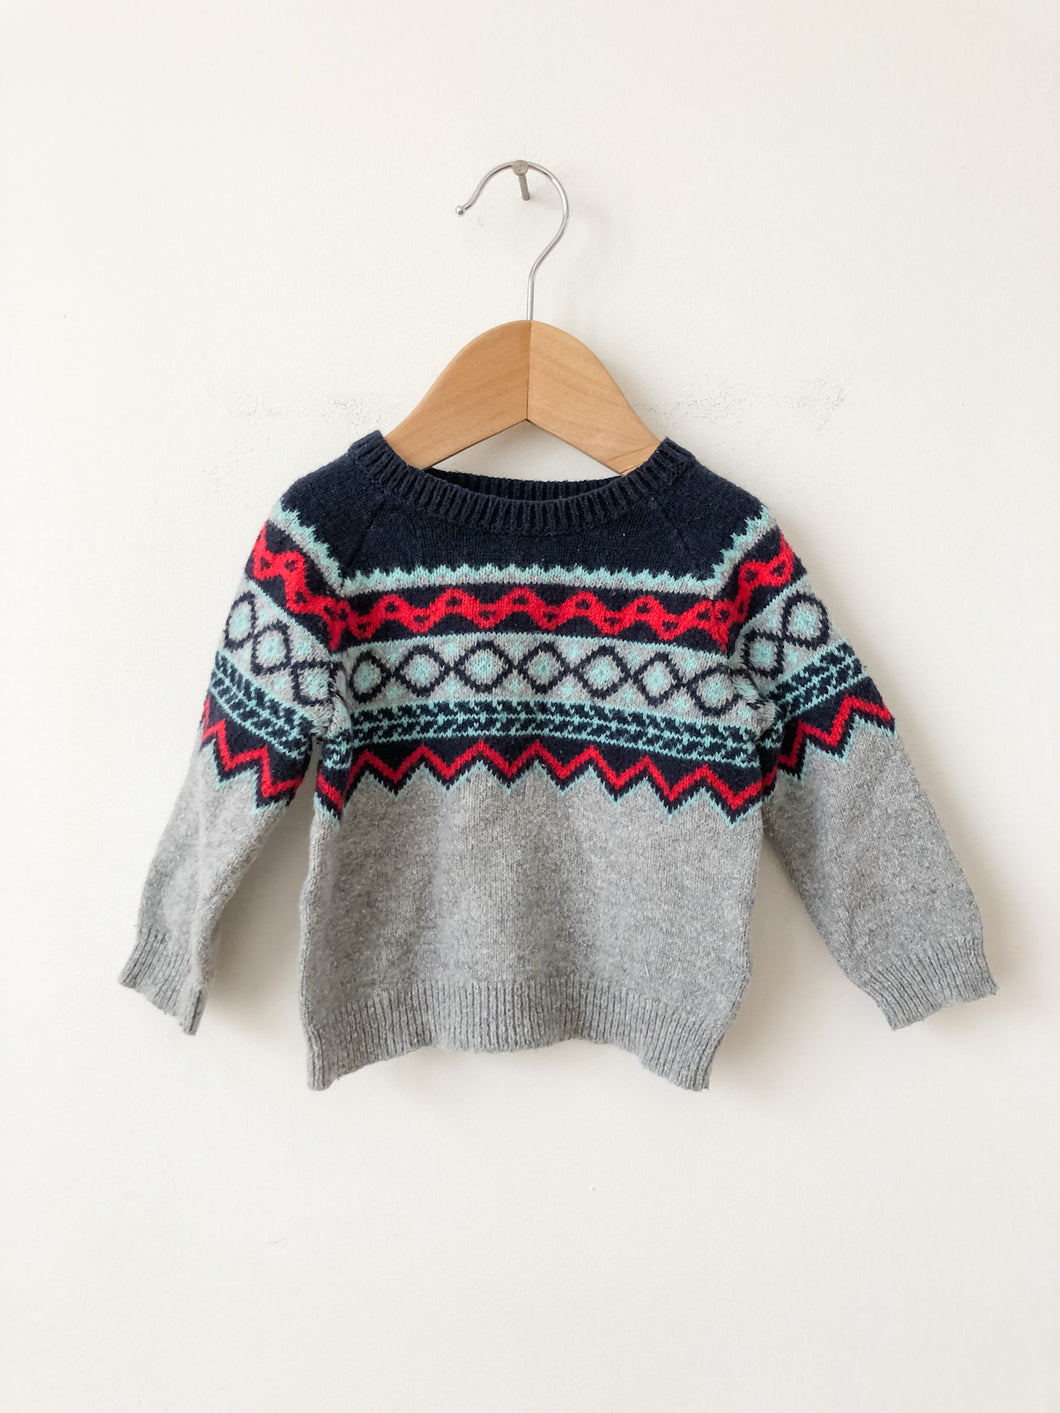 Boys Knit OshKosh Sweater Size 9 Months